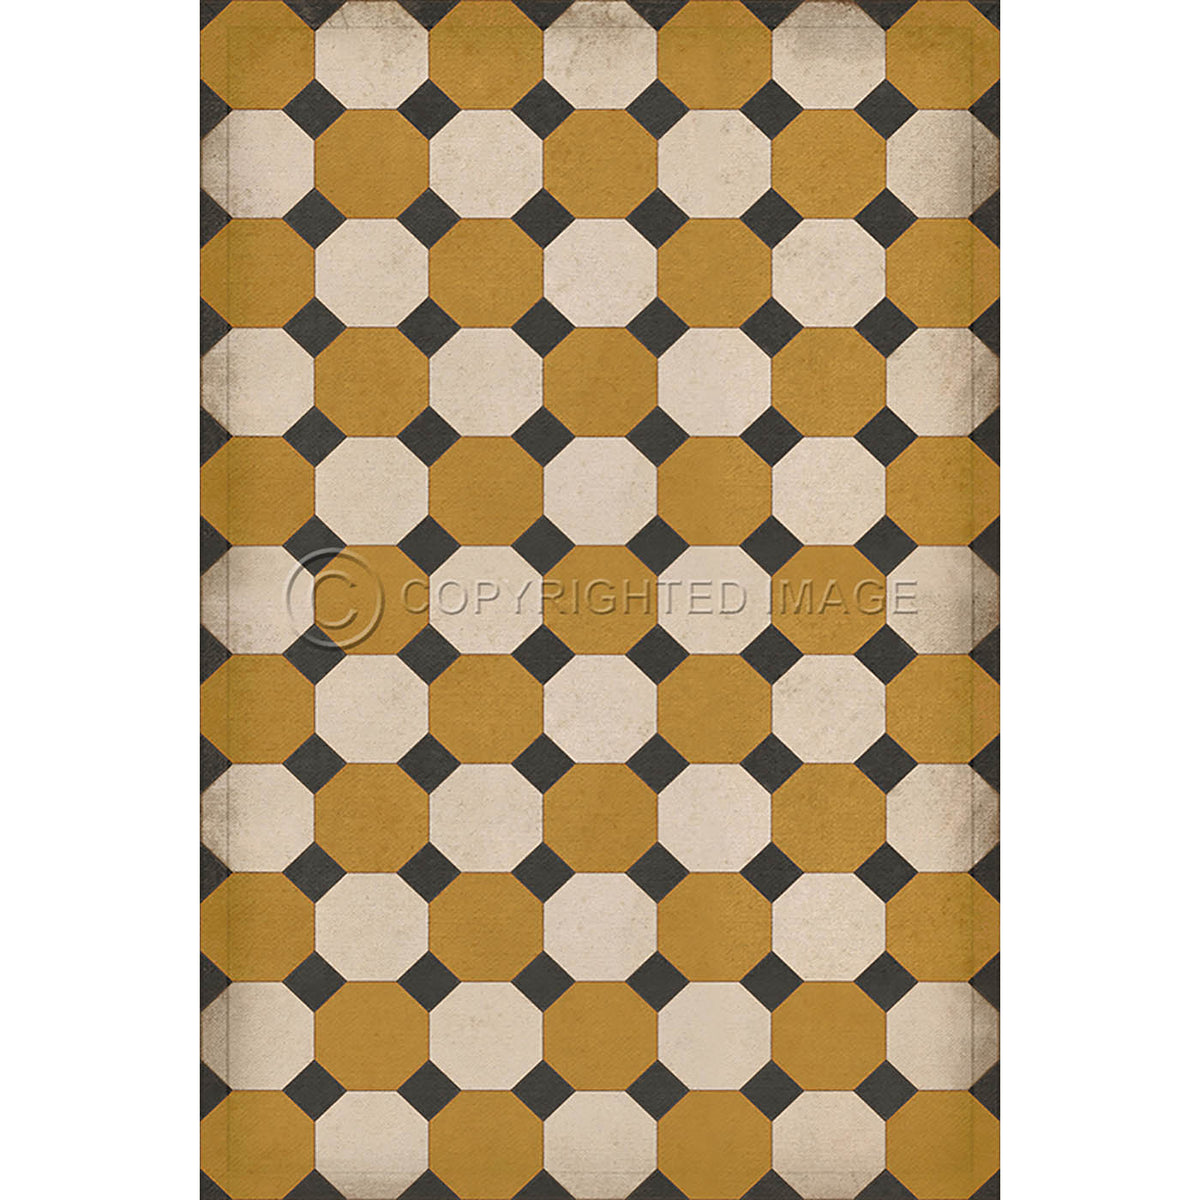 Octagons Jefferson 20x30